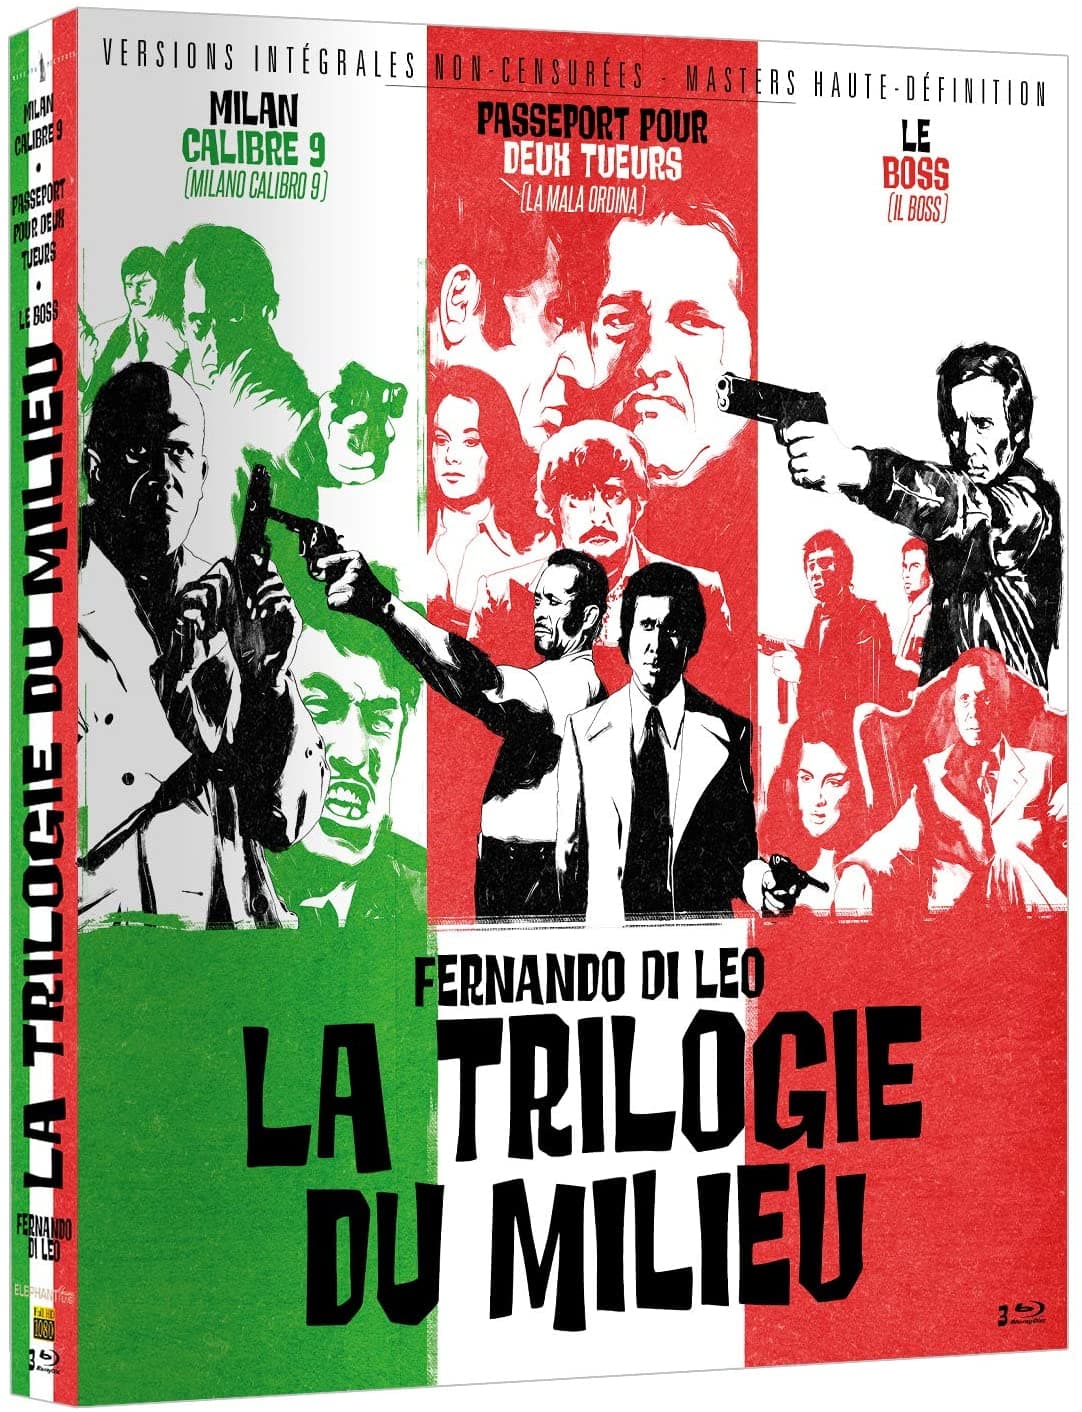 Notre histoire - Bertrand Blier - Studiocanal - DVD - Potemkine PARIS